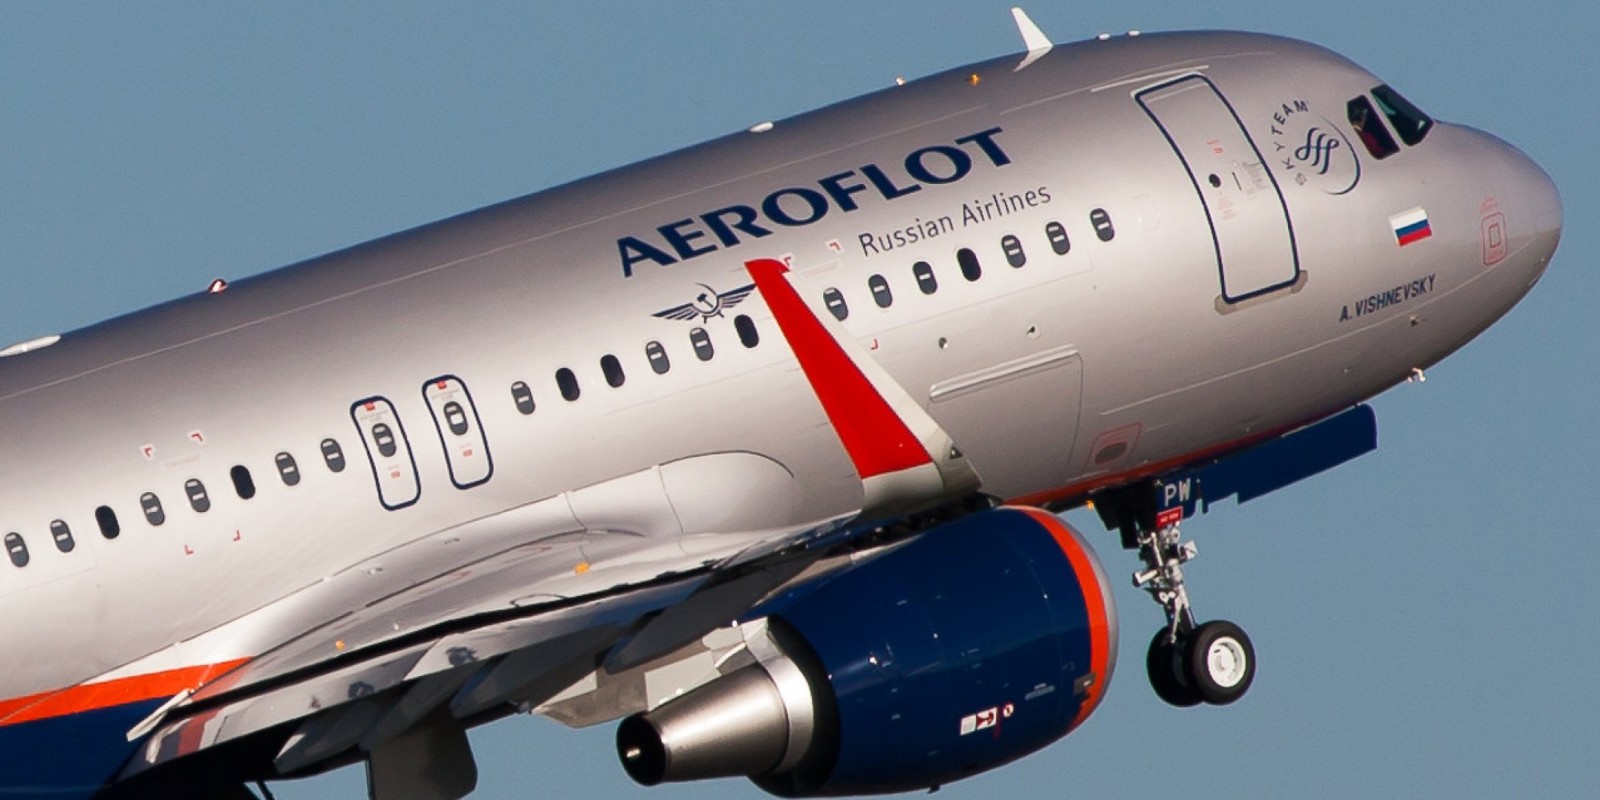 Aeroflot services, not for everyone ... - Aeroflot, Situation, Longpost, Incident, Negative